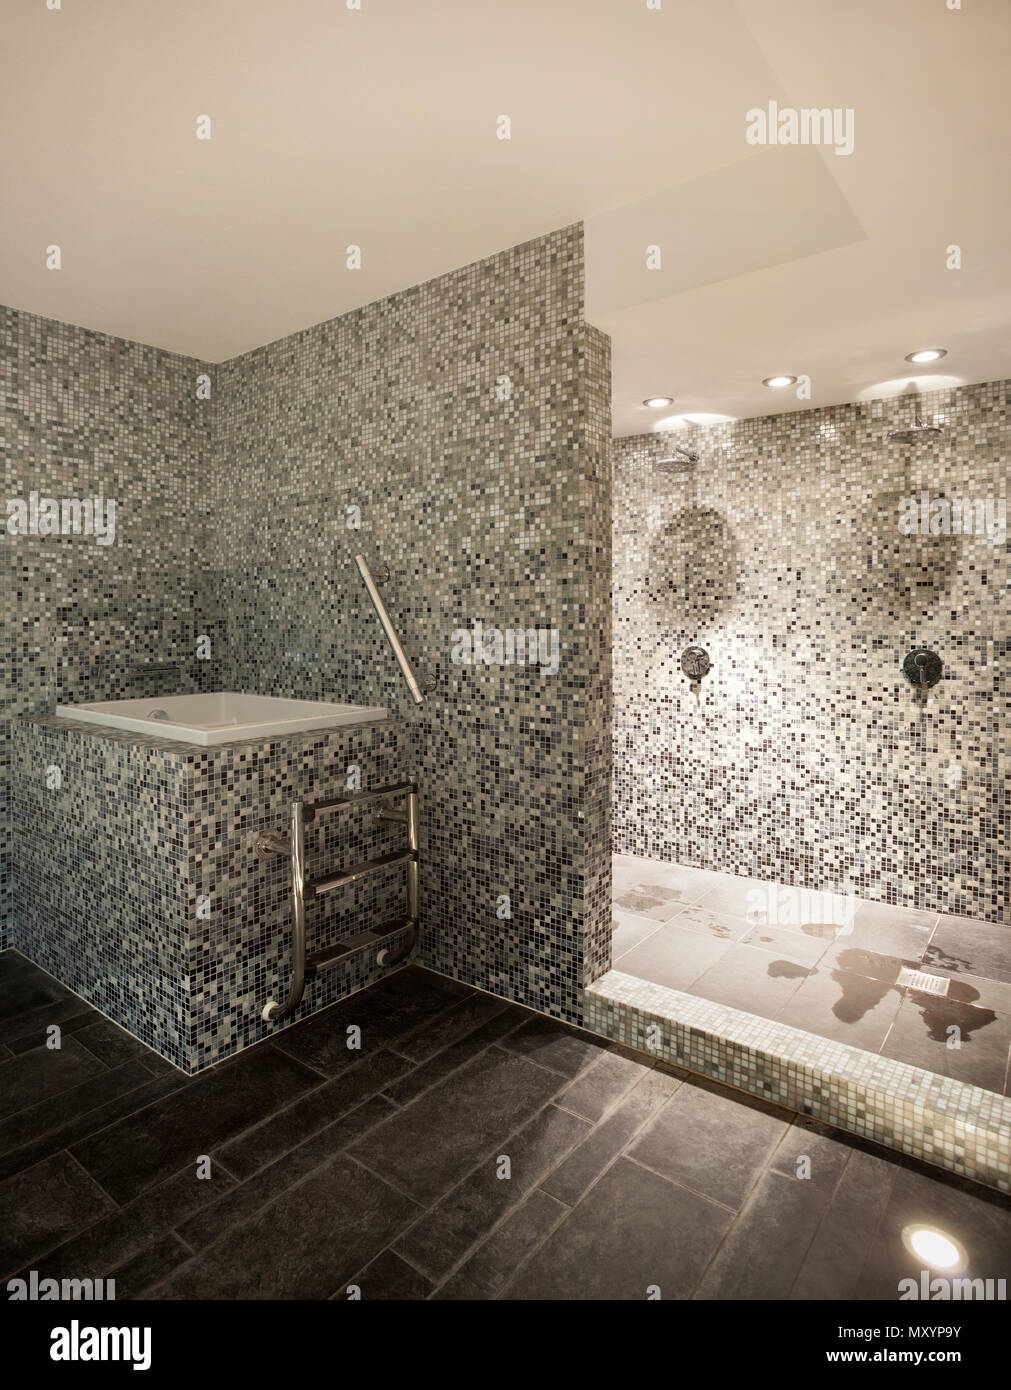 Interior de una casa moderna, baño turco de vapor Fotografía de stock -  Alamy